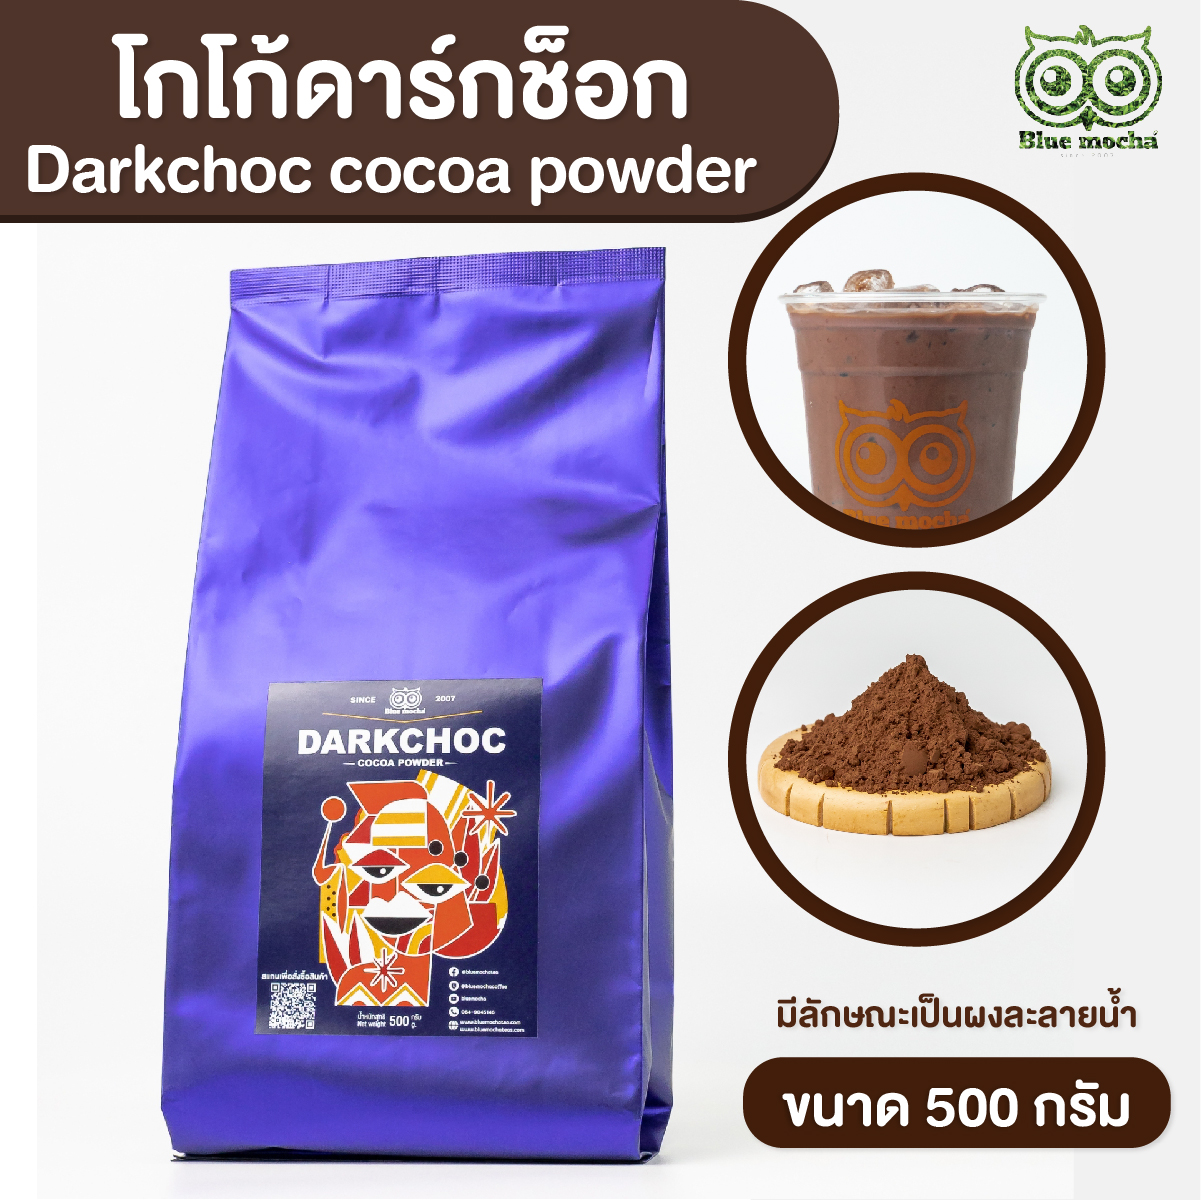 Darkchoc cocoa